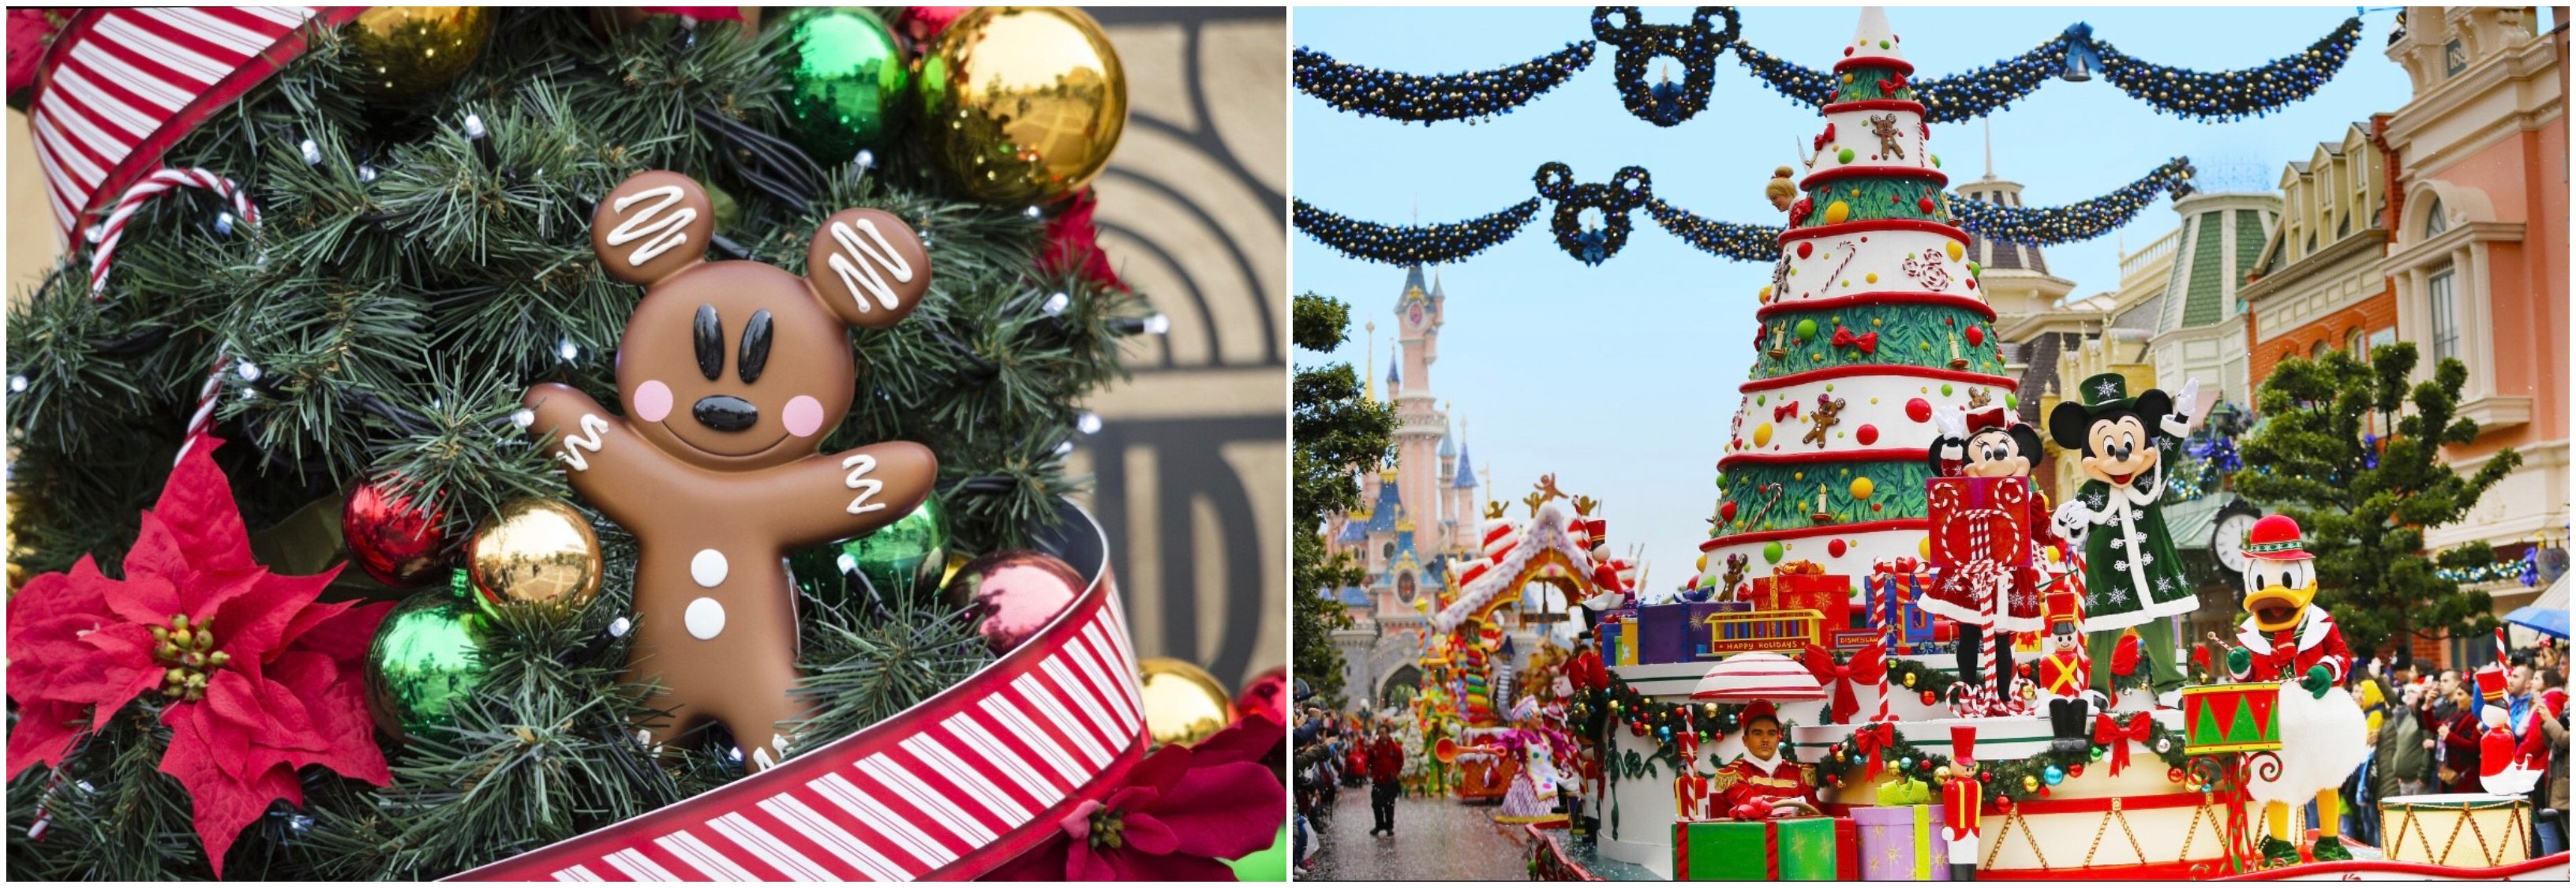 Christmas Season Returns to Disneyland Paris This November!